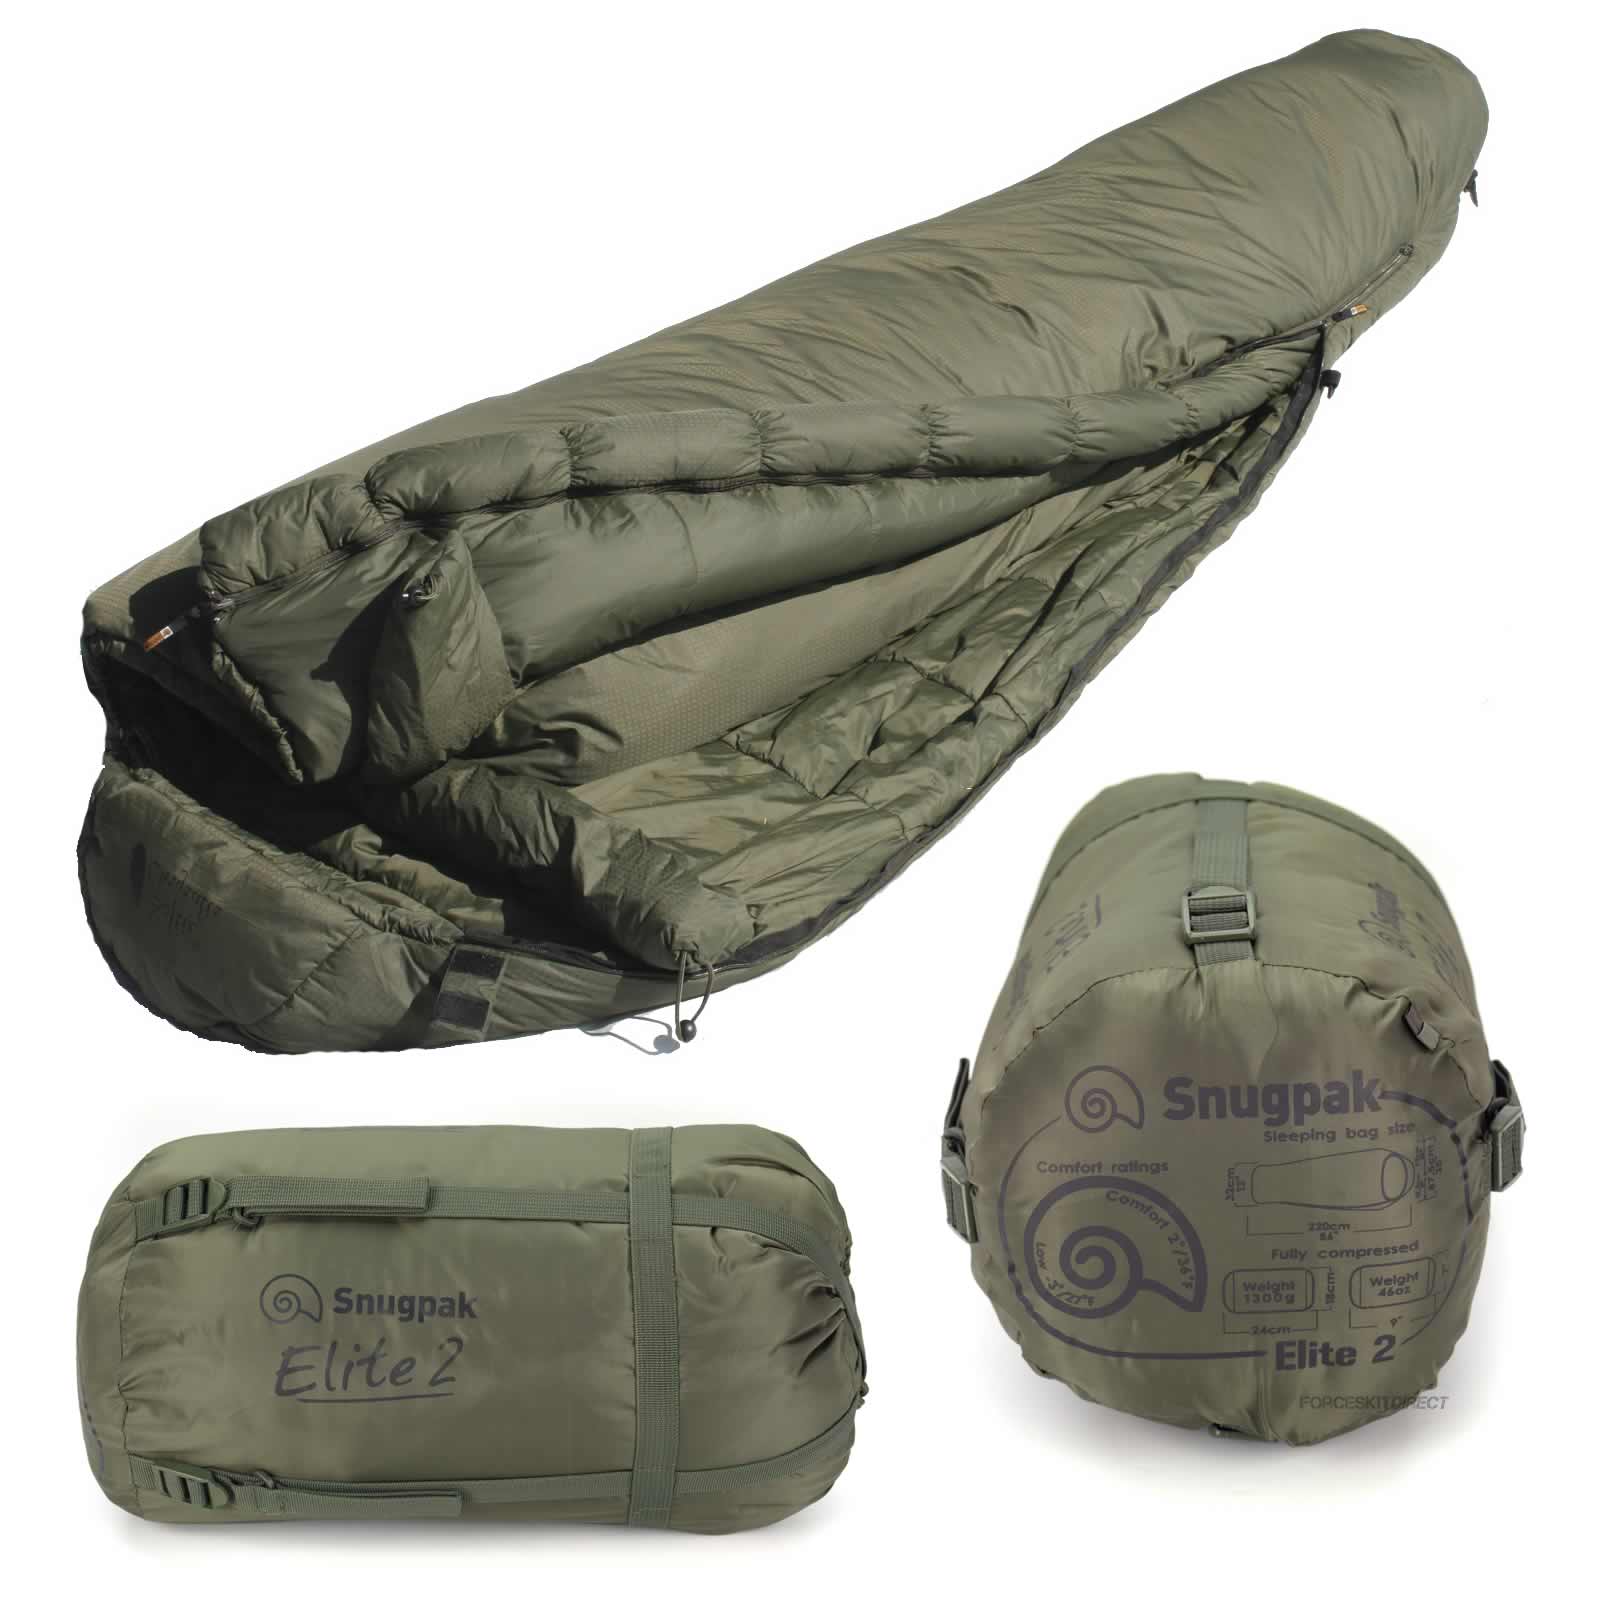 Snugpak Softie Elite 2 Military Army Sleeping Bag Olive Green Lightweight 8211650510135 | eBay